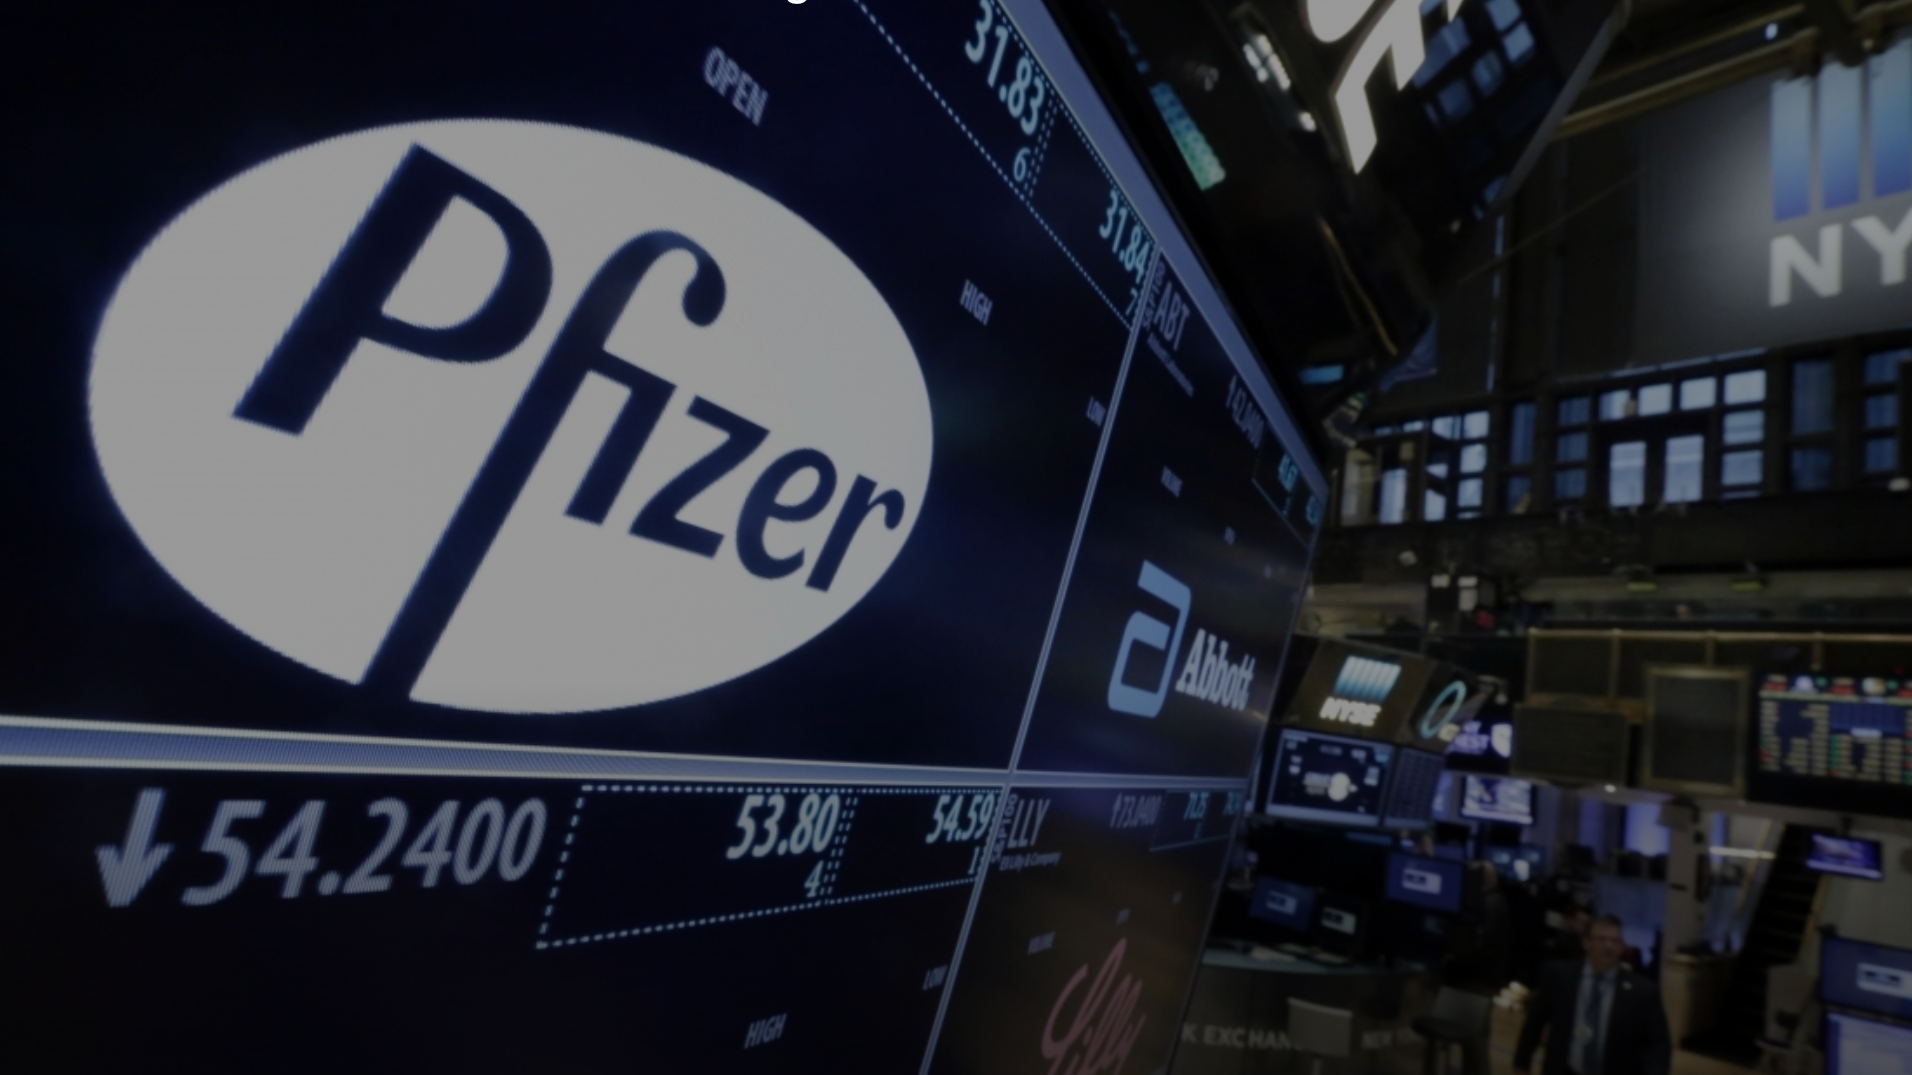 Pfizer logo on stock exchange board